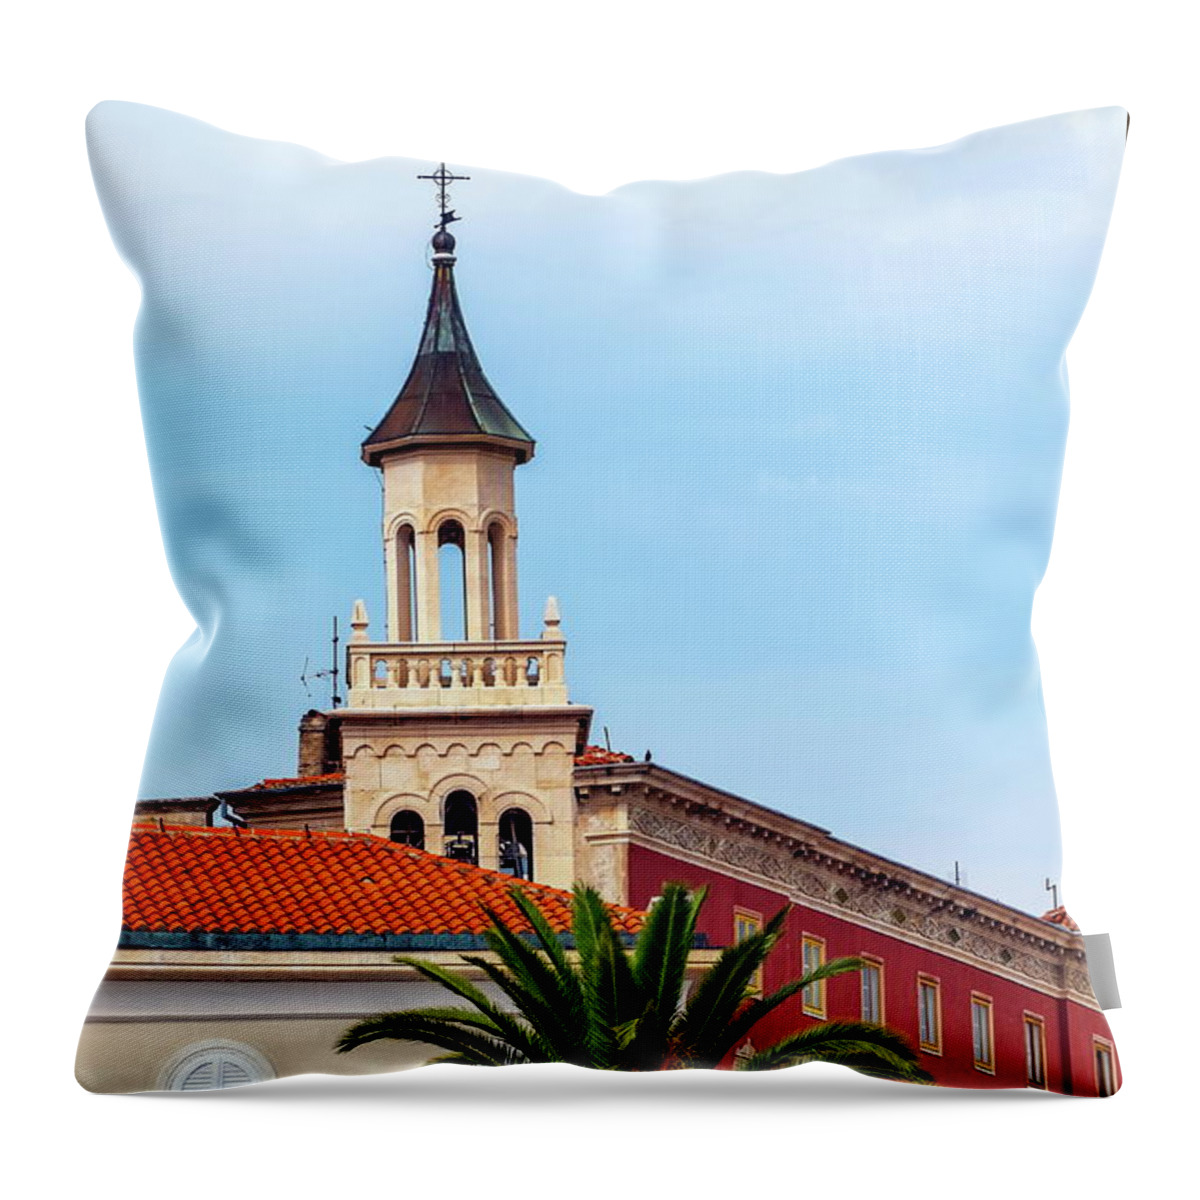 Spire Throw Pillow featuring the photograph Saint Franje, Francis, church near the old Market Square, Split, Croatia by Elenarts - Elena Duvernay photo